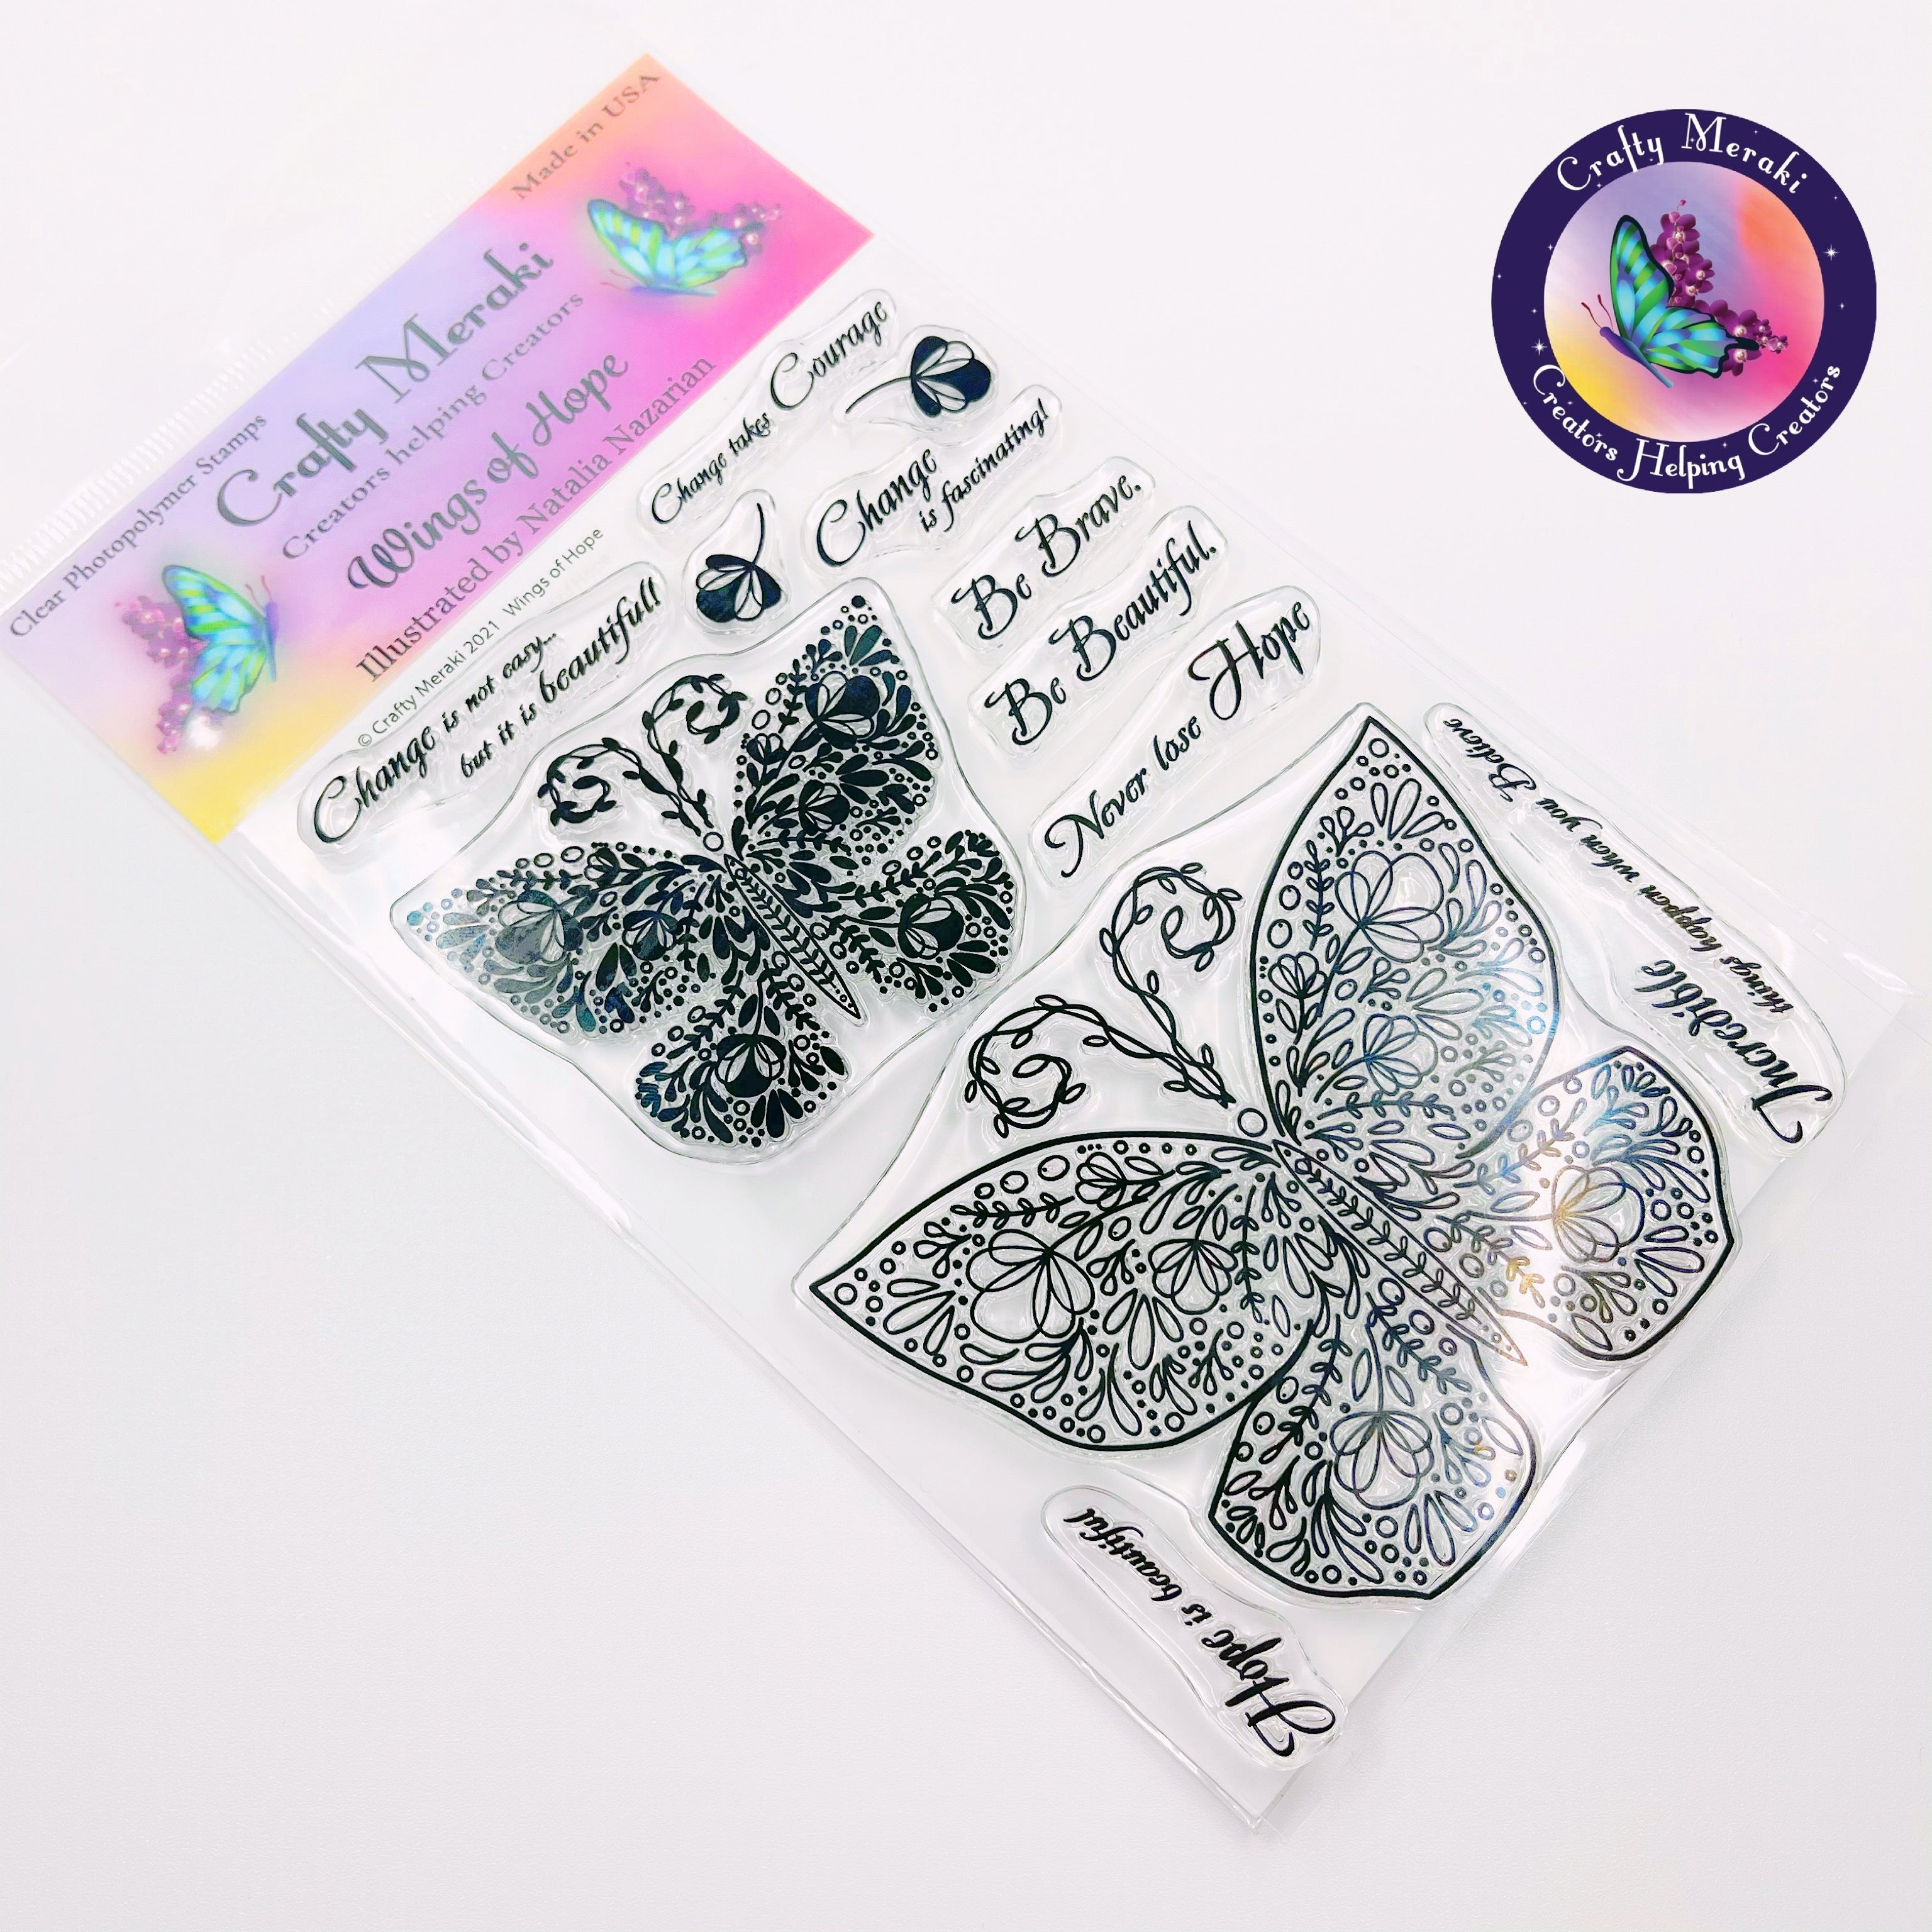 Crafty Meraki Wings of Hope Stamp set - Crafty Meraki